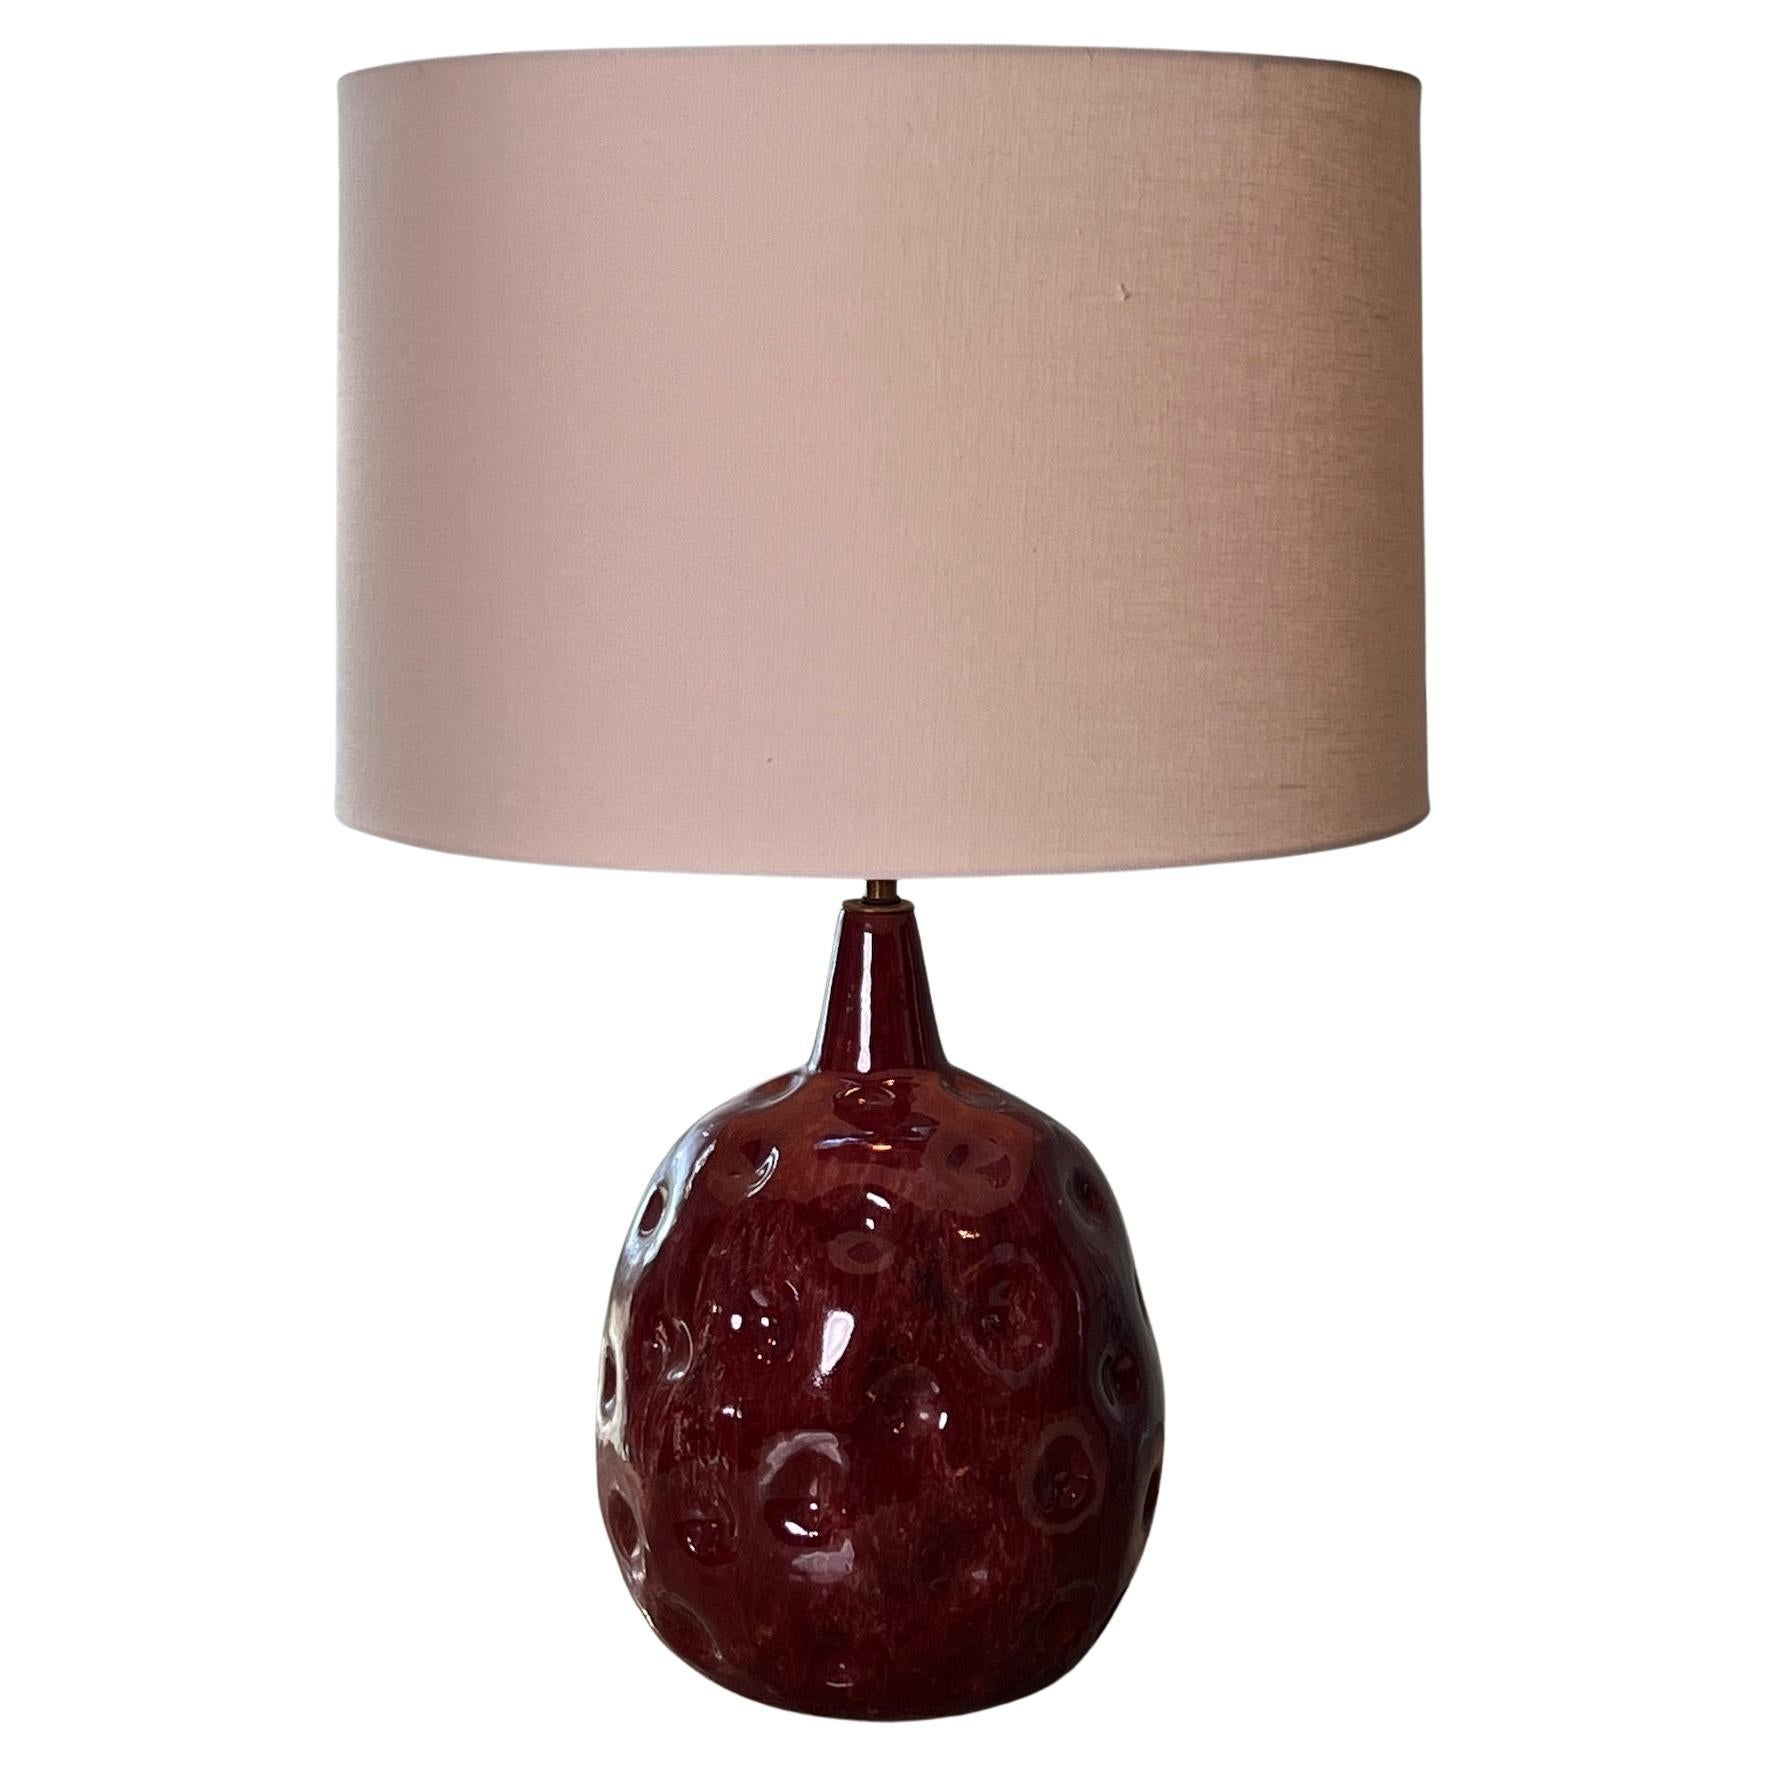 Marcello Fantoni Dimpled Ceramic Table Lamp For Sale